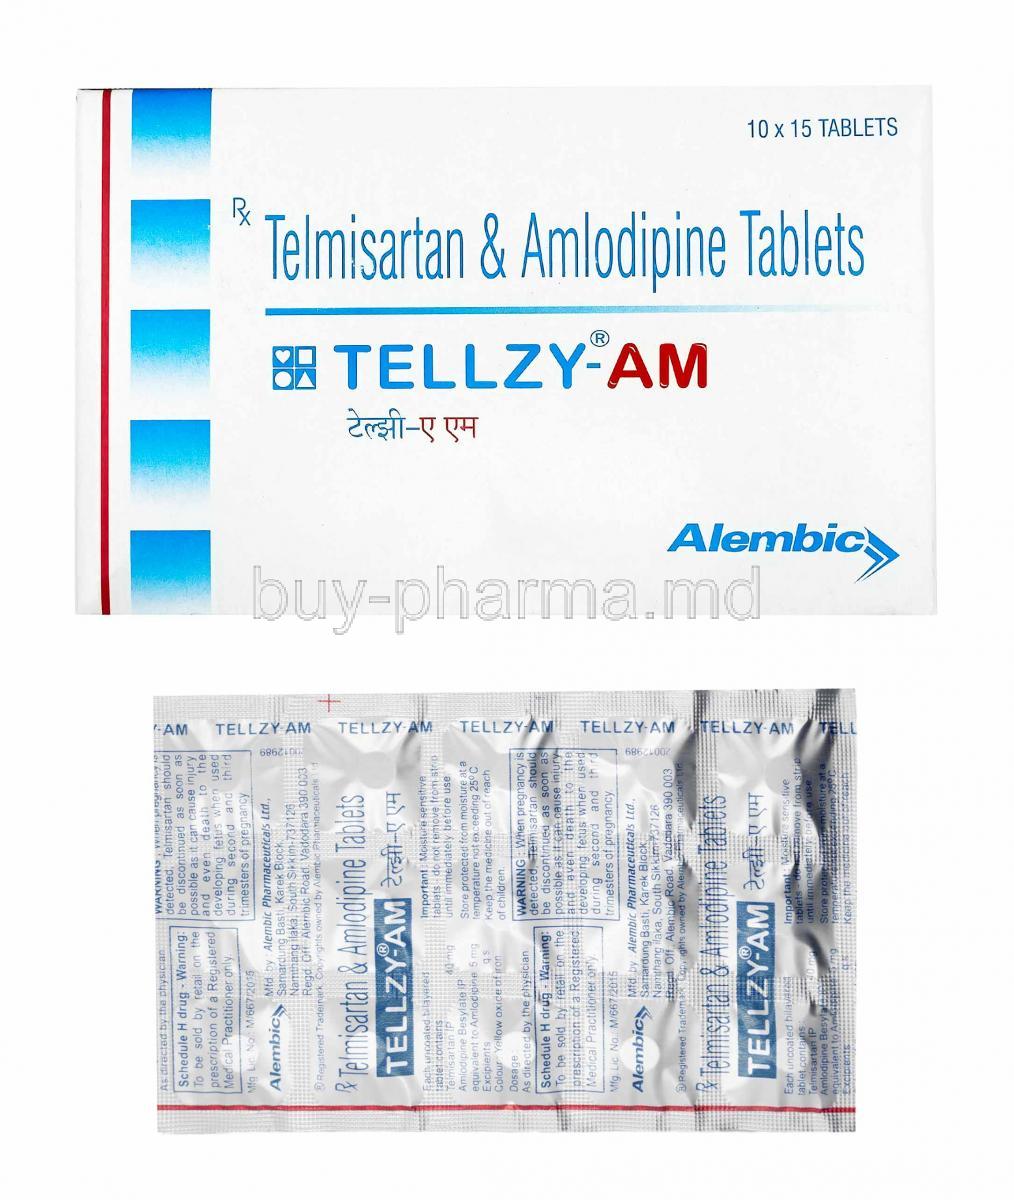 Tellzy-AM, Telmisartan and Amlodipine 40mg box and tablets